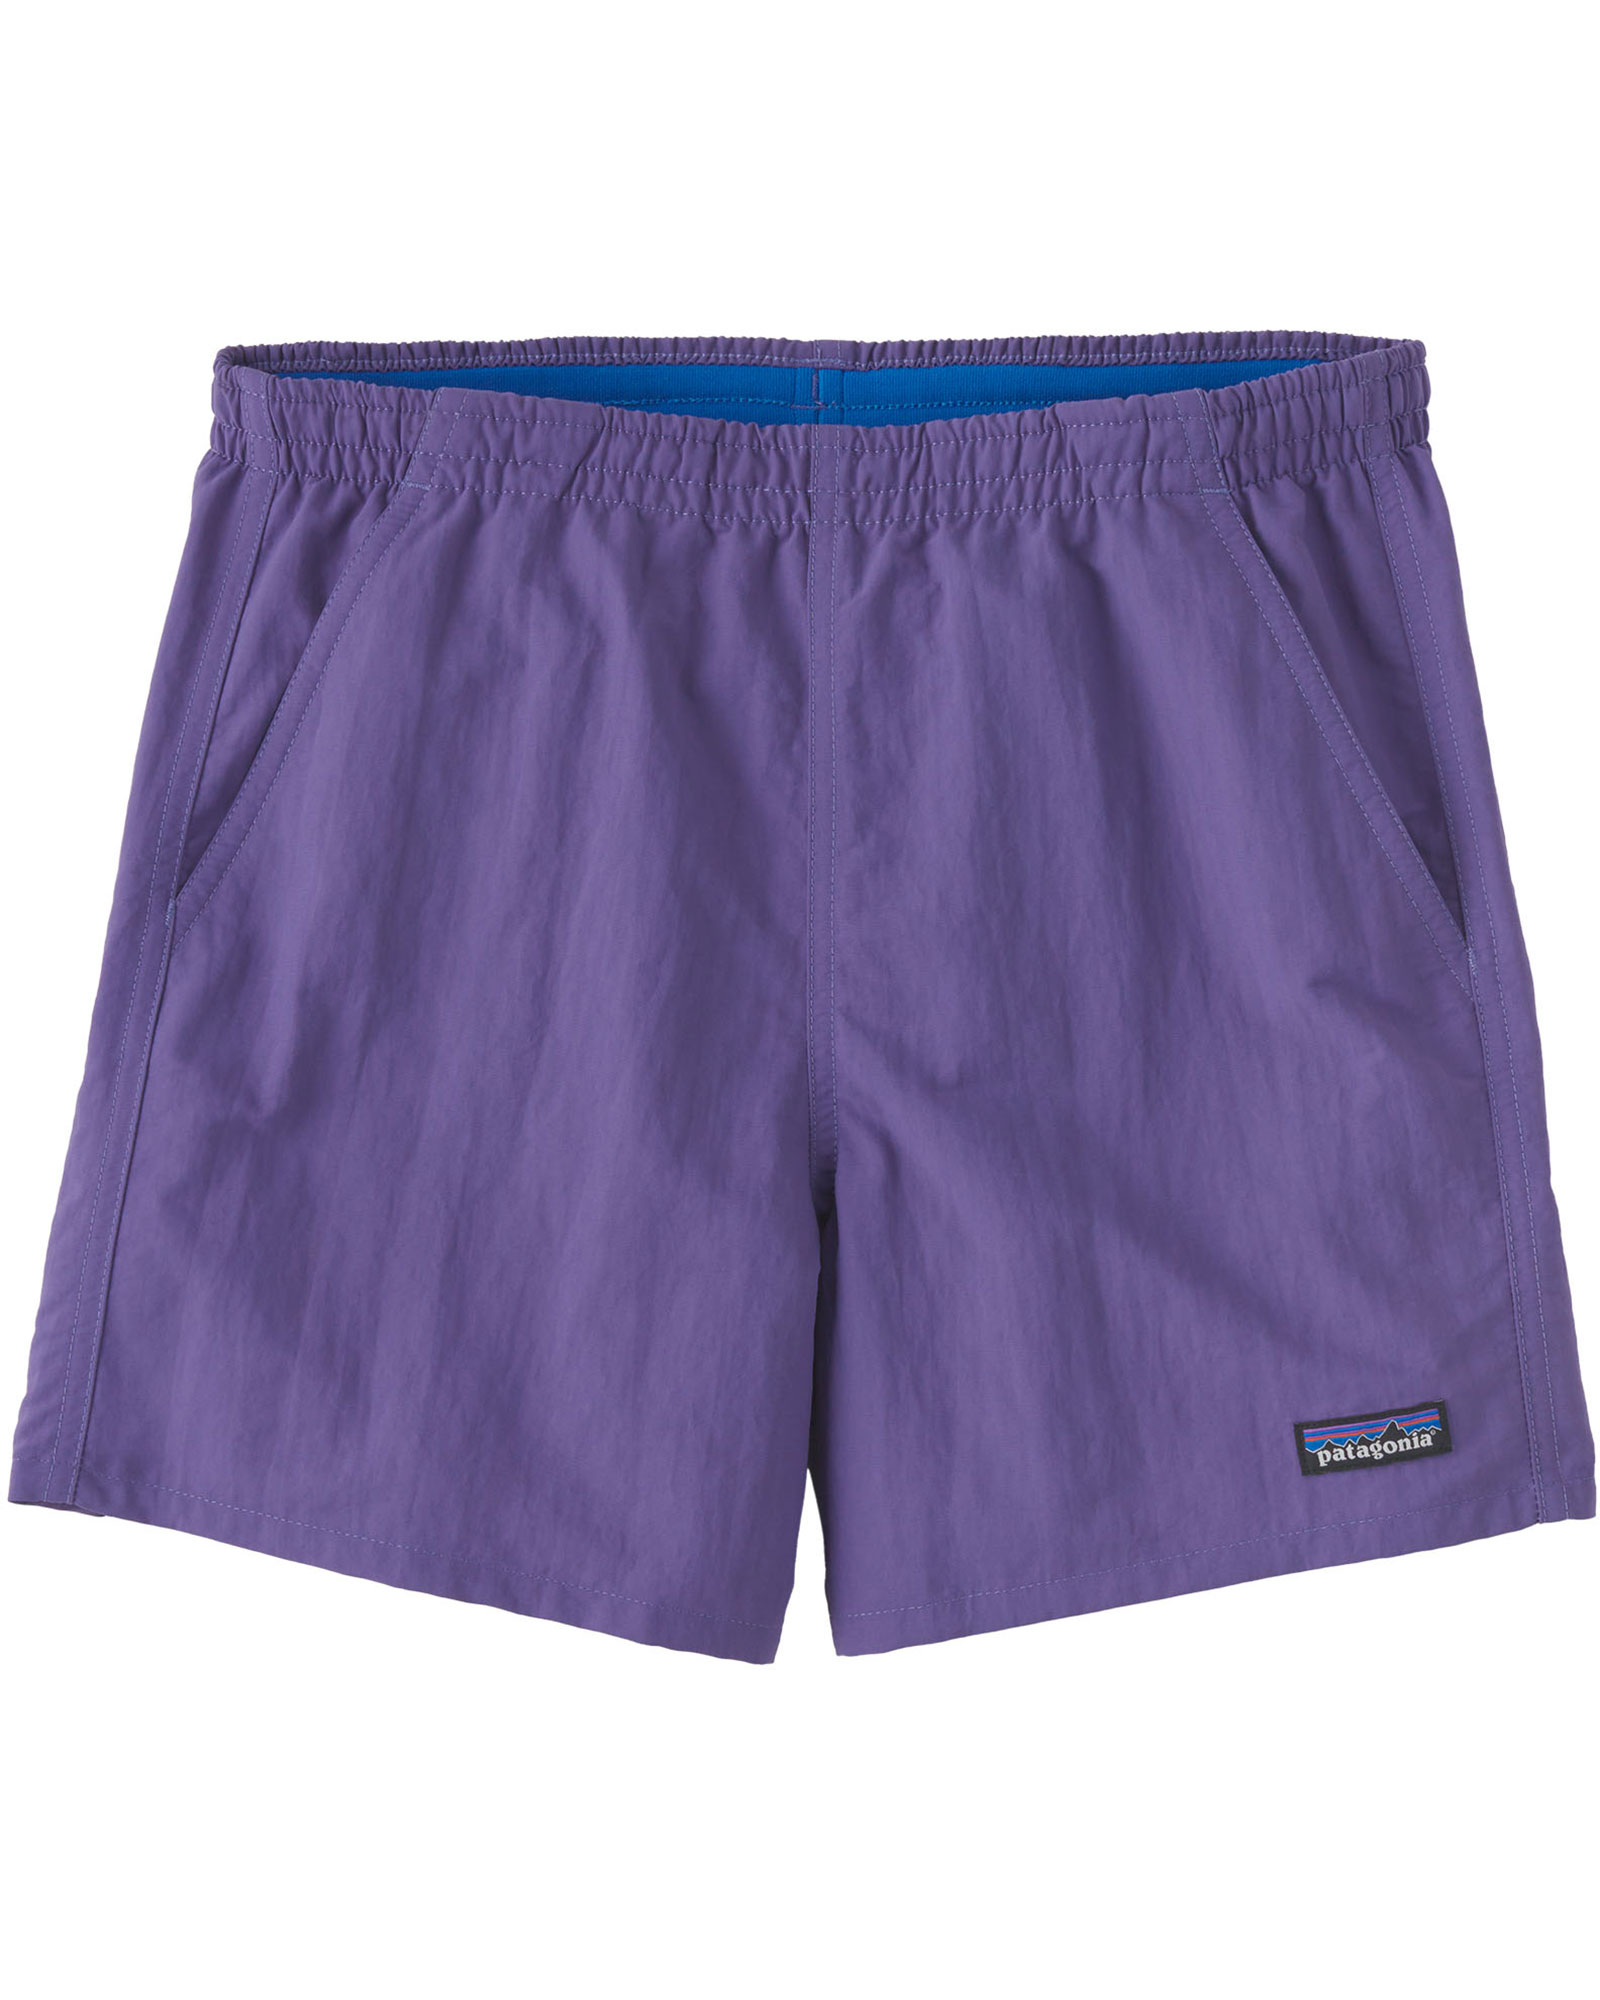 Patagonia Baggies Women’s 5" Shorts - Perennial Purple L